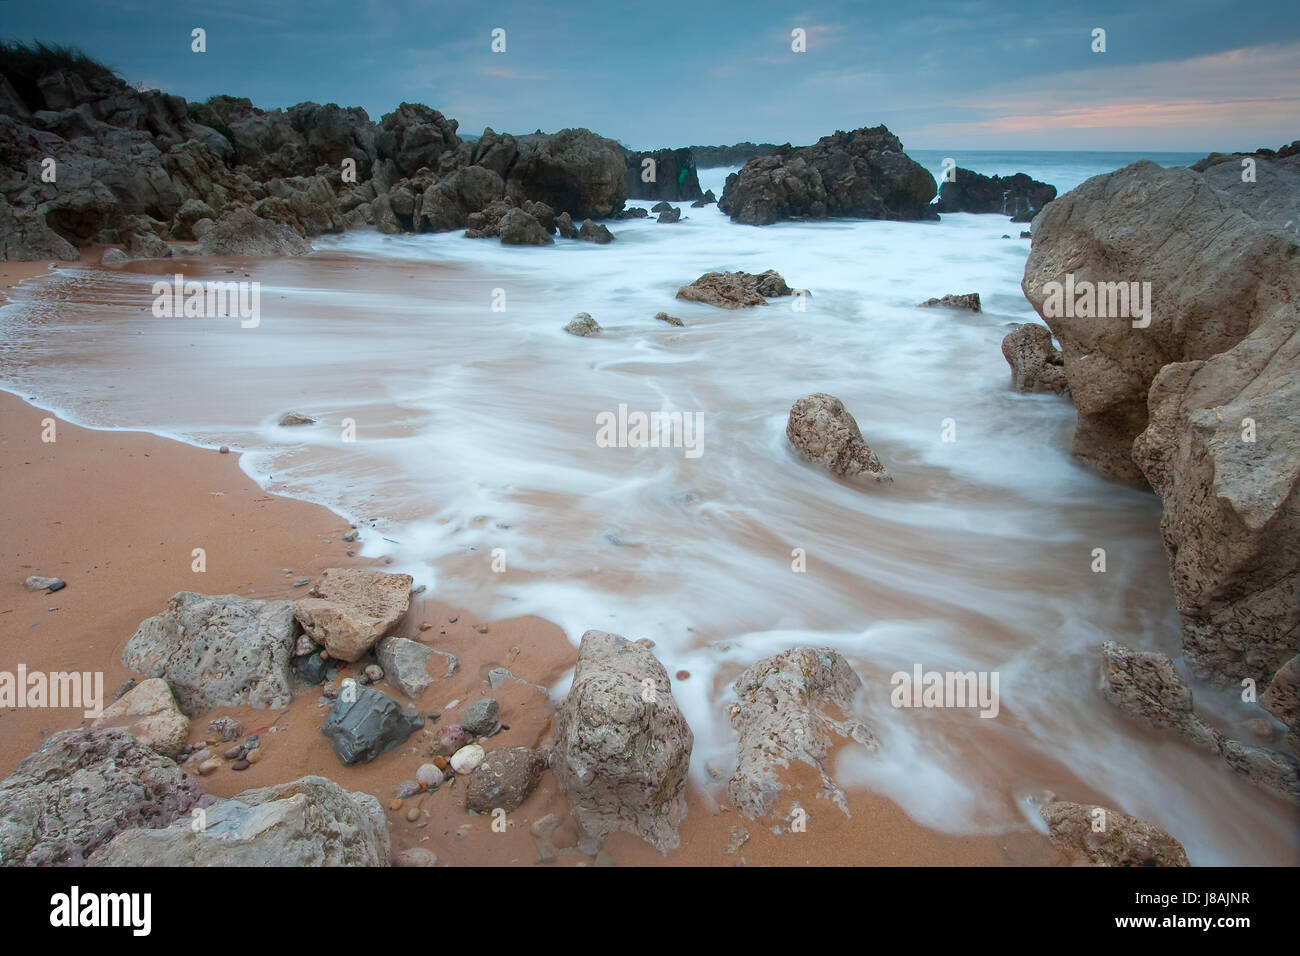 stone, beach, seaside, the beach, seashore, spain, coast, salt water, sea, Stock Photo